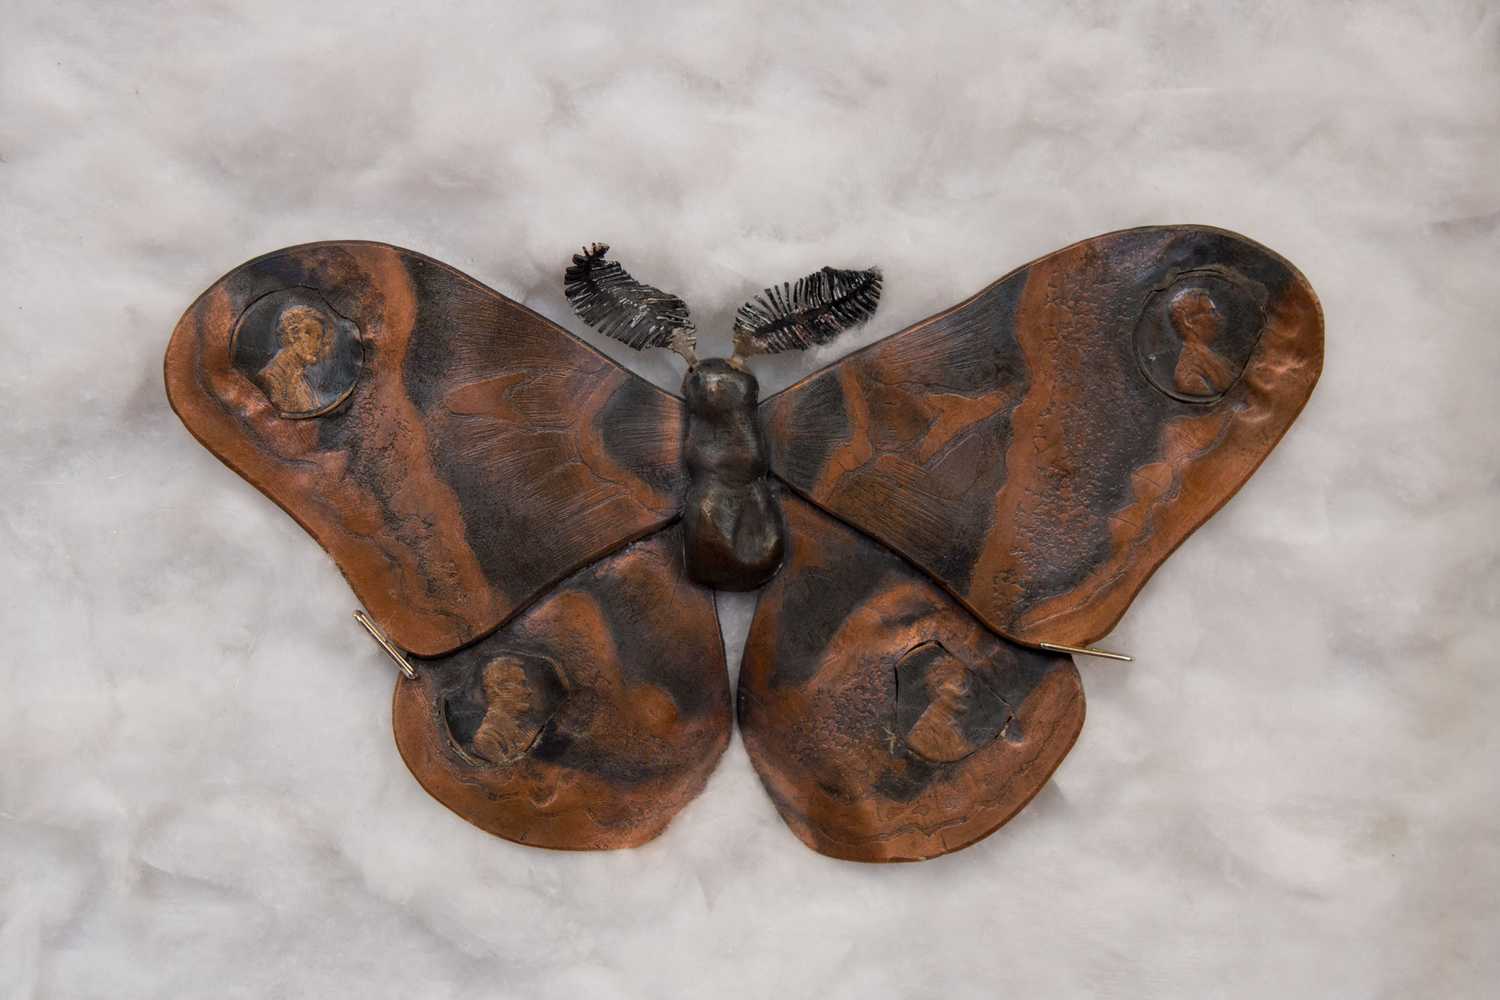 jkery moth front